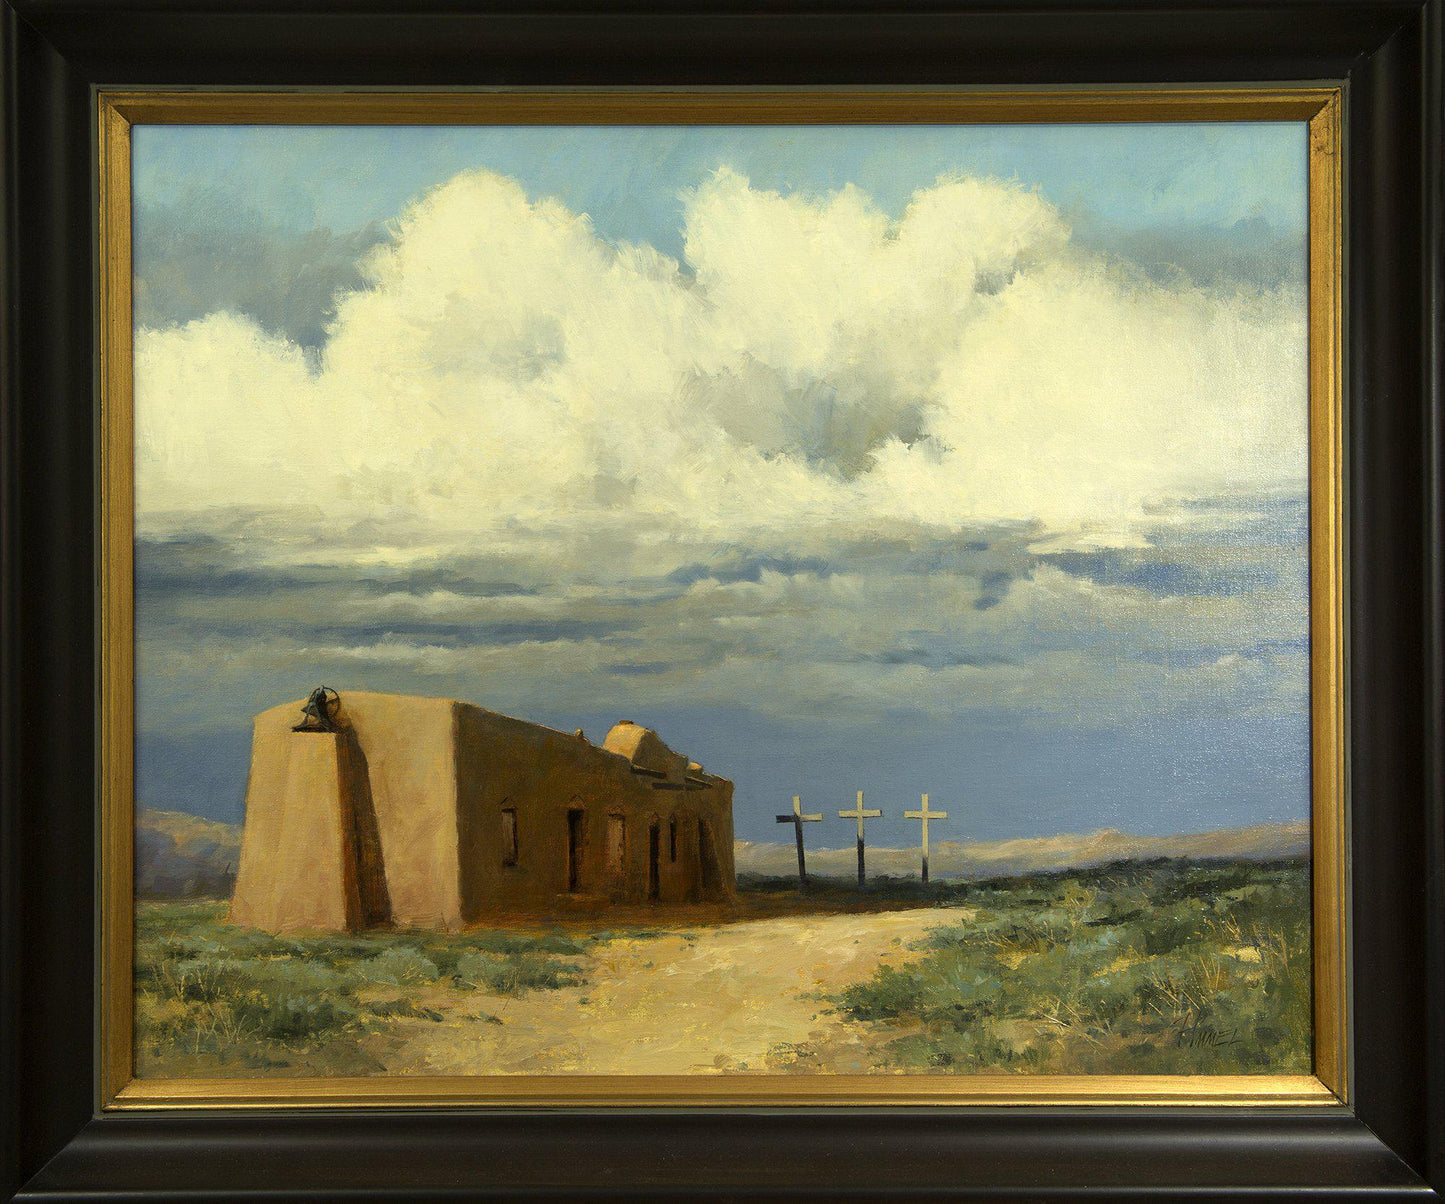 Morada del Alto-Painting-Peggy Immel-Sorrel Sky Gallery